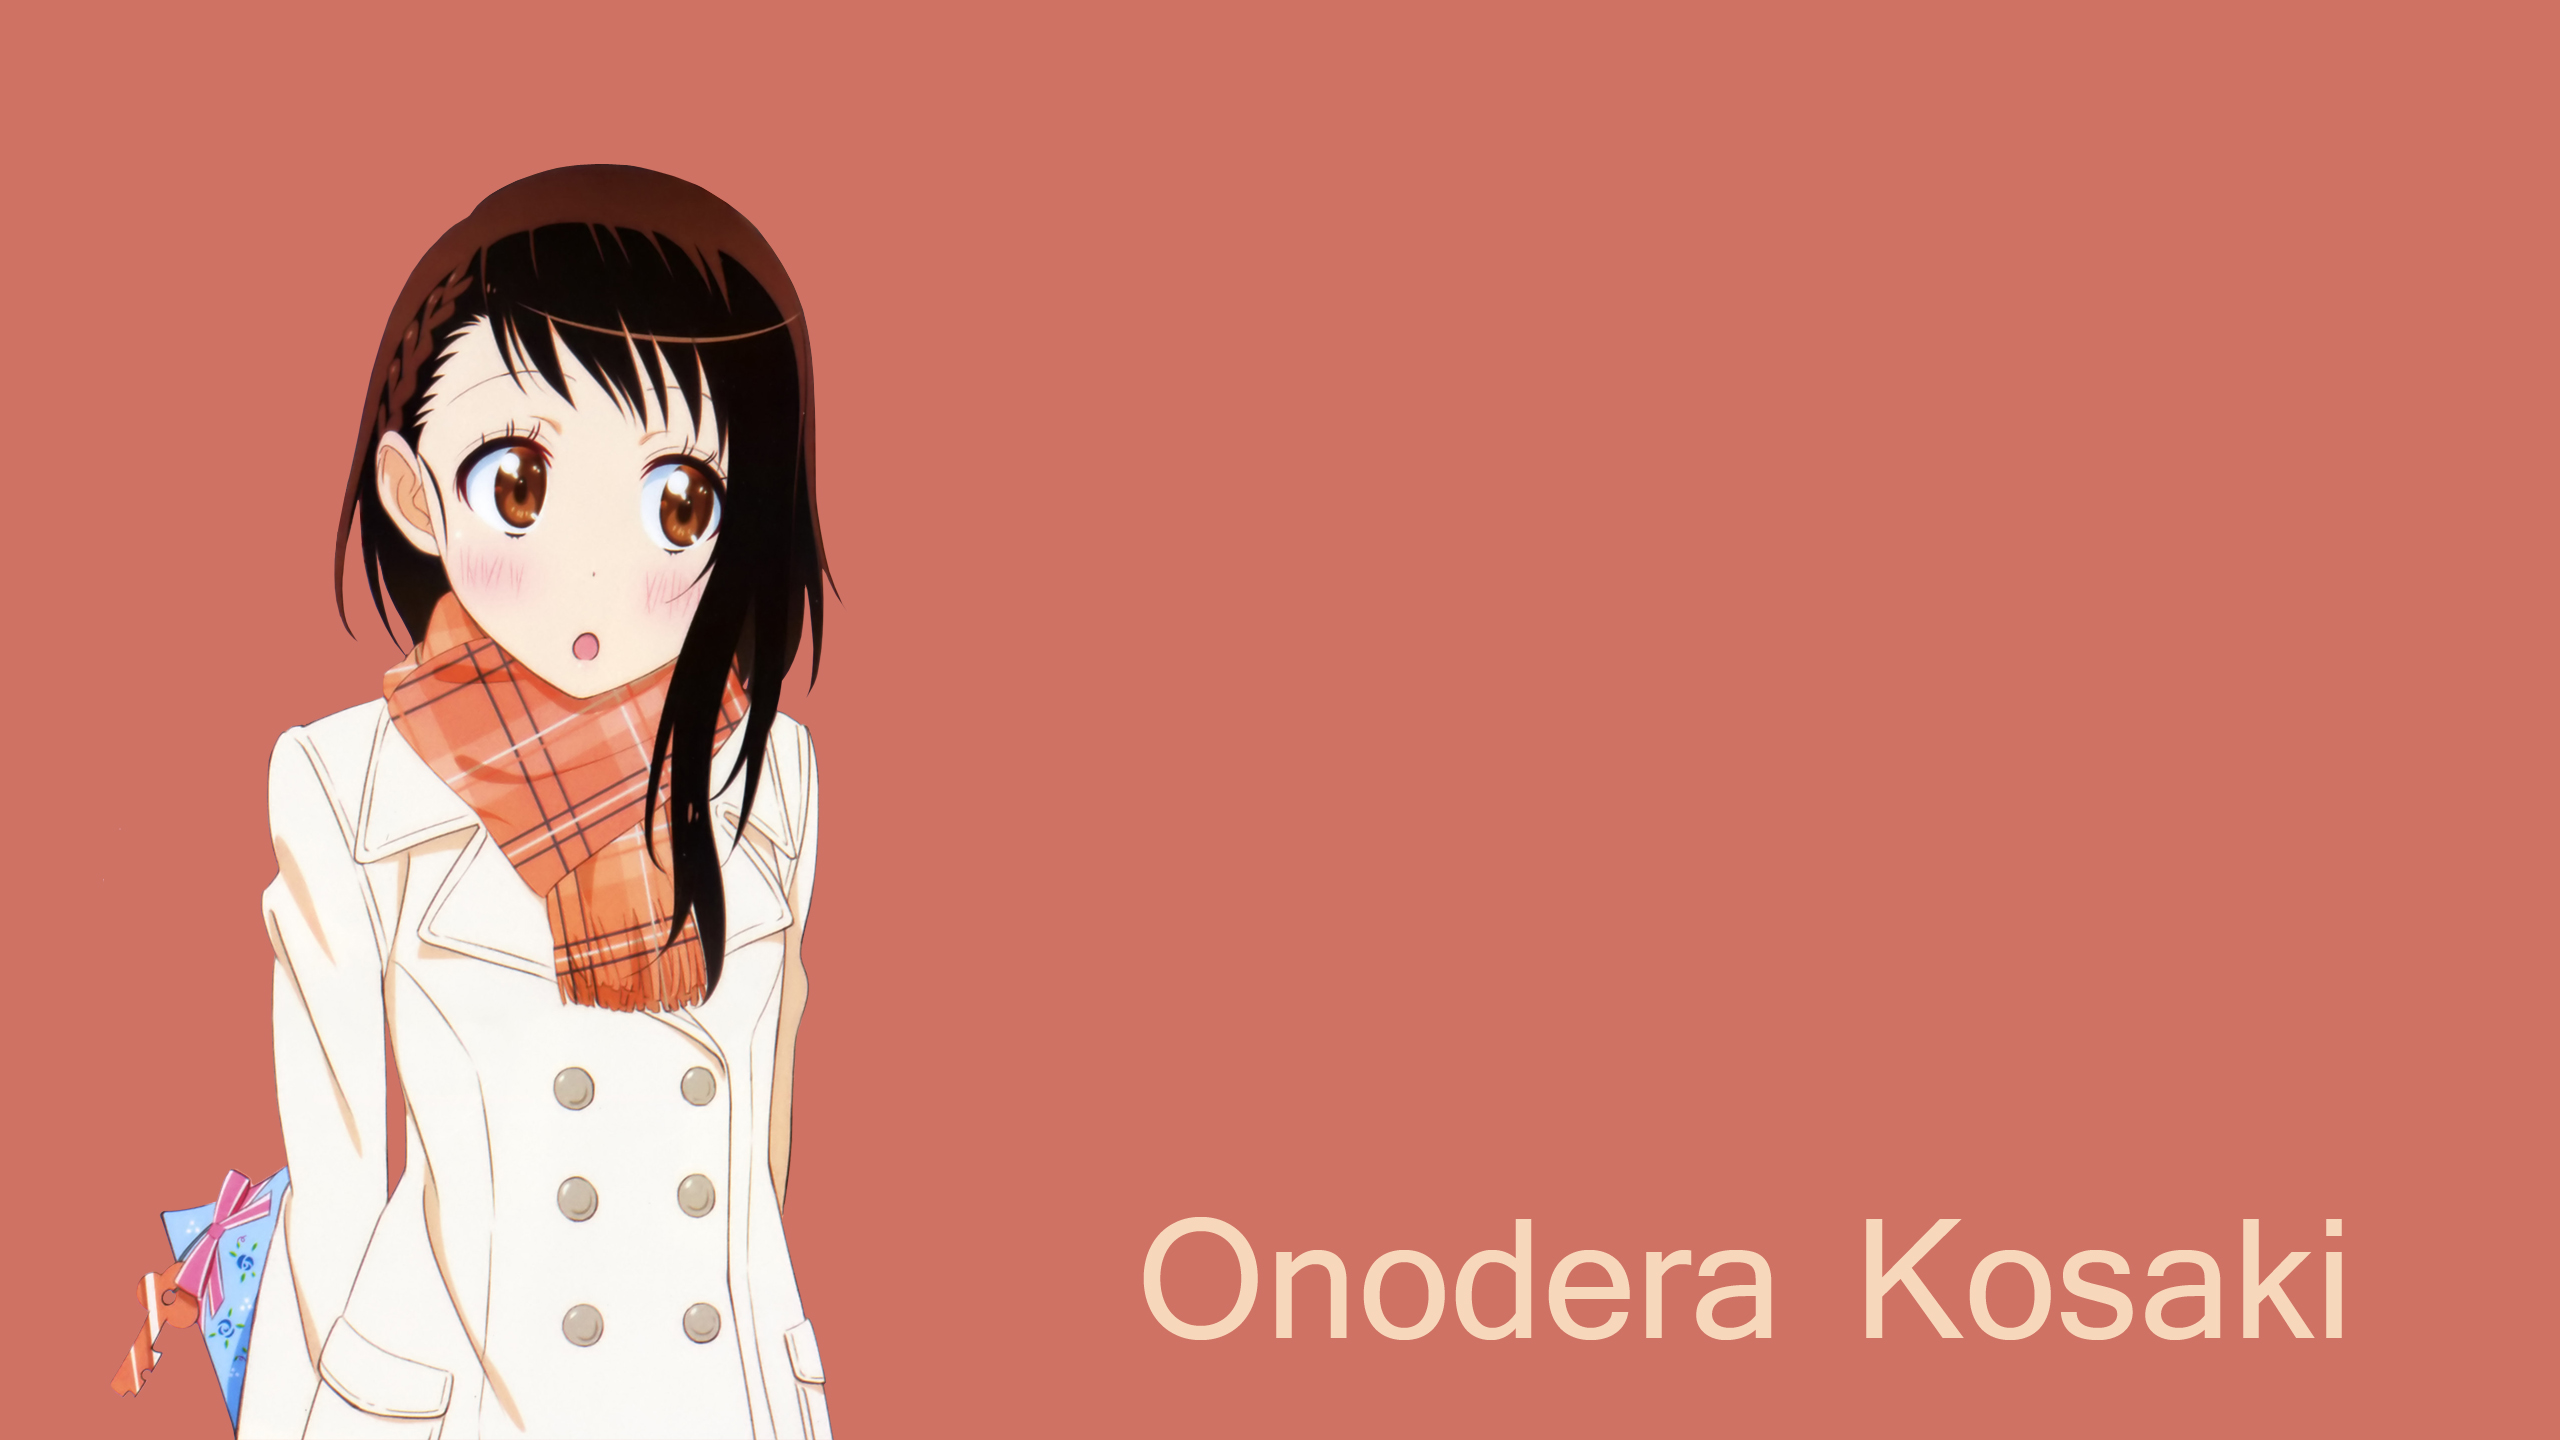 Anime 2560x1440 Onodera Kosaki Nisekoi anime girls anime text simple background open mouth dark hair brown eyes standing